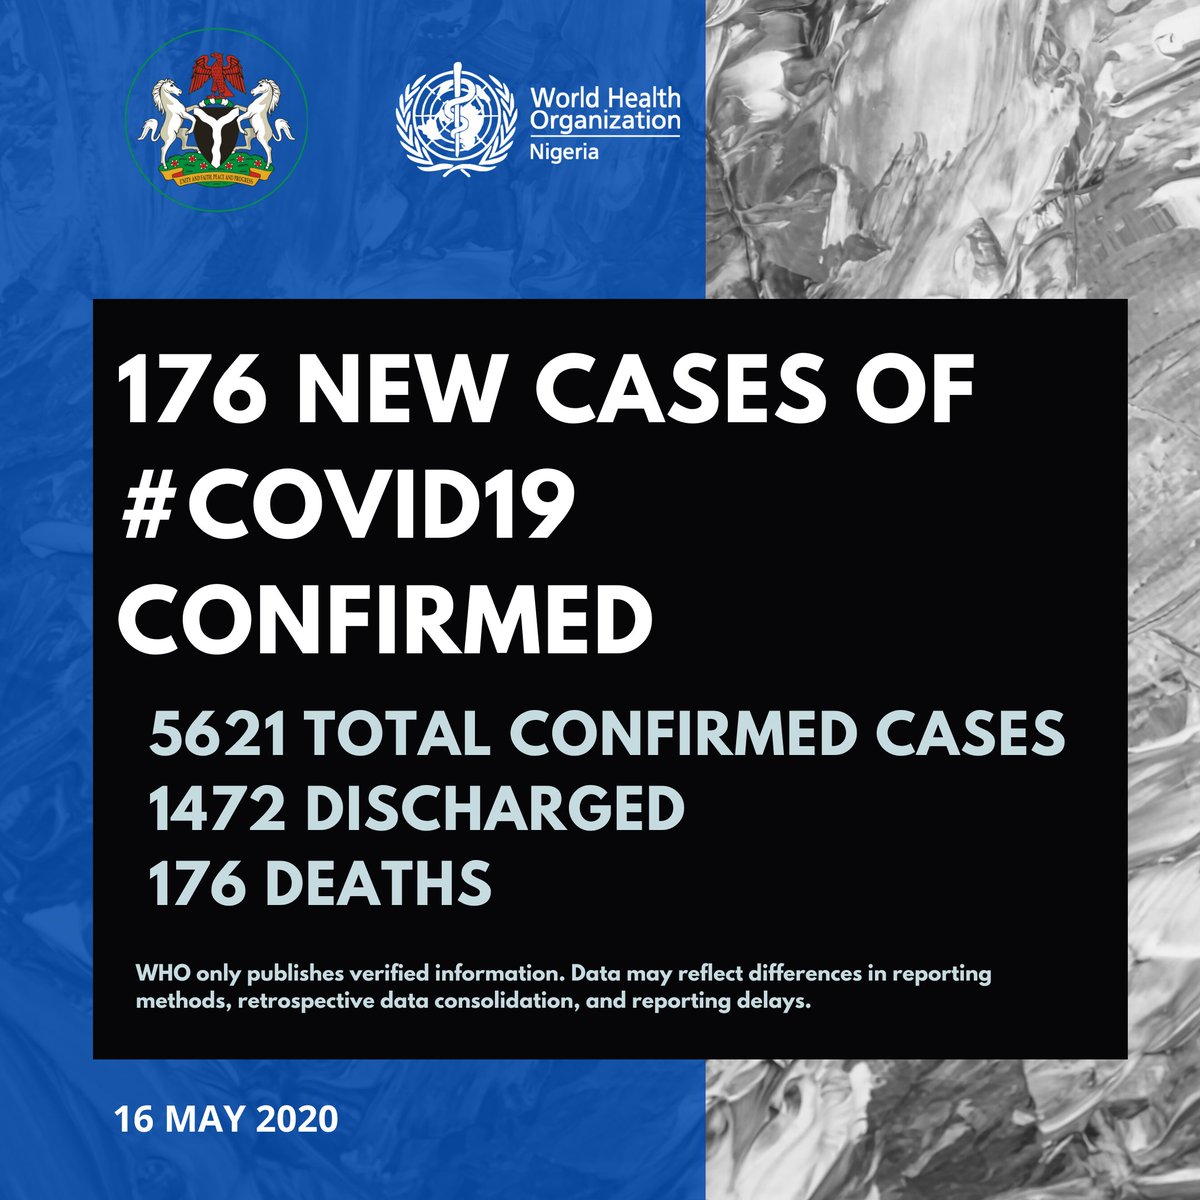 Update as at 16 May 2020 - 176 new cases of #COVID19 have been reported: 95-Lagos 31-Oyo 11-FCT 8-Niger 8-Borno 6-Jigawa 4-Kaduna 3-Anambra 2-Edo 2-Rivers 2-Nasarawa 2-Bauchi 1-Benue 1-Zamfara Total confirmed cases: 5621 Discharged: 1472 Deaths: 176